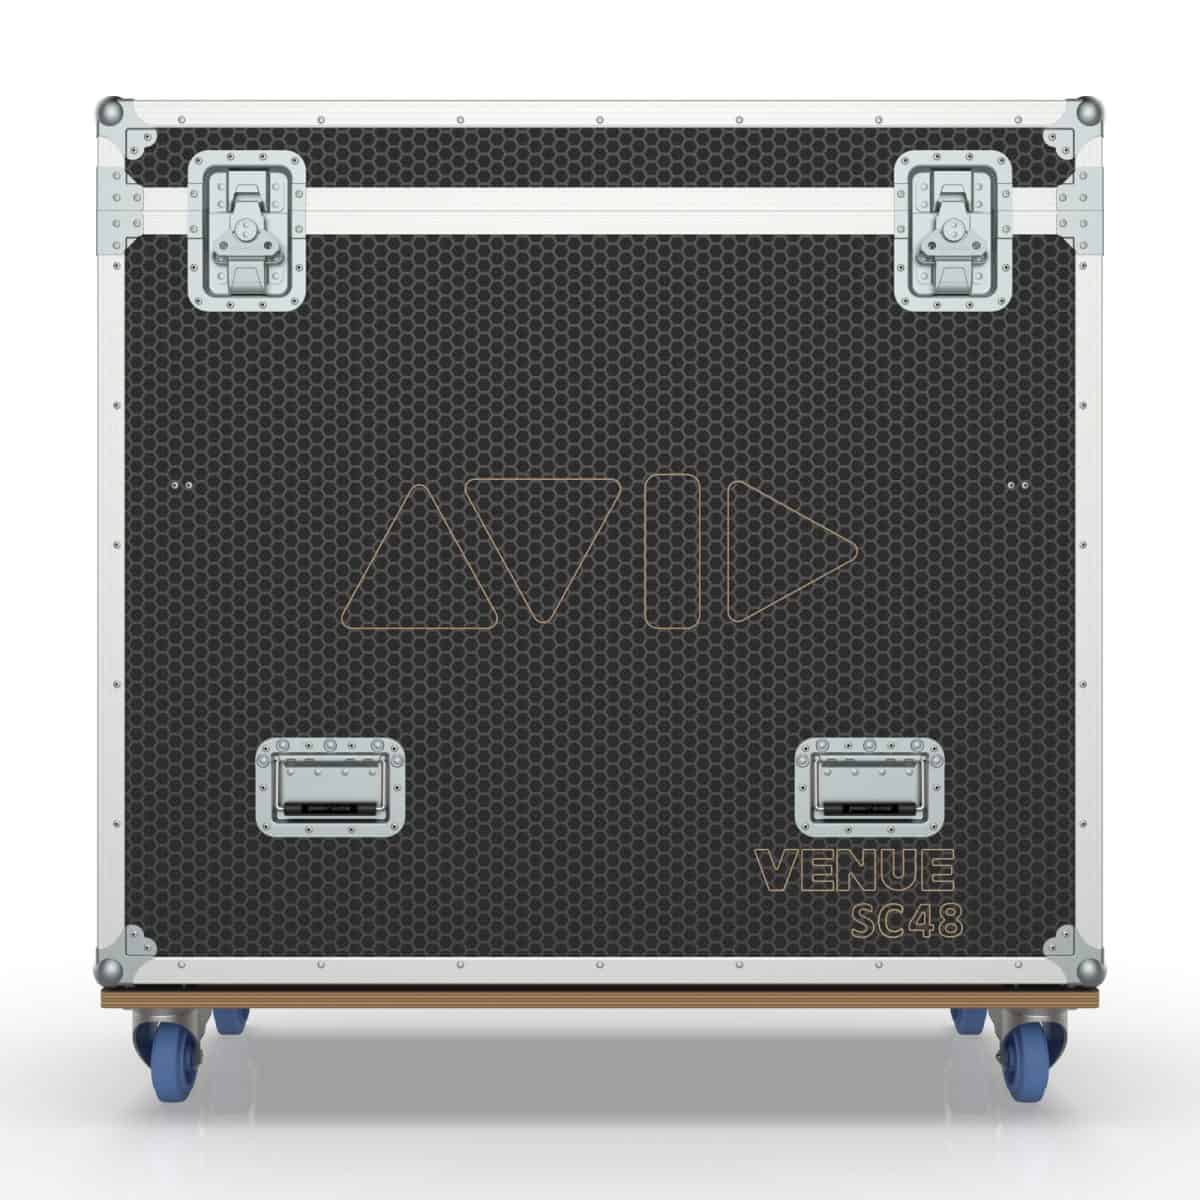 Road Case for Avid Venue SC48 Sound System